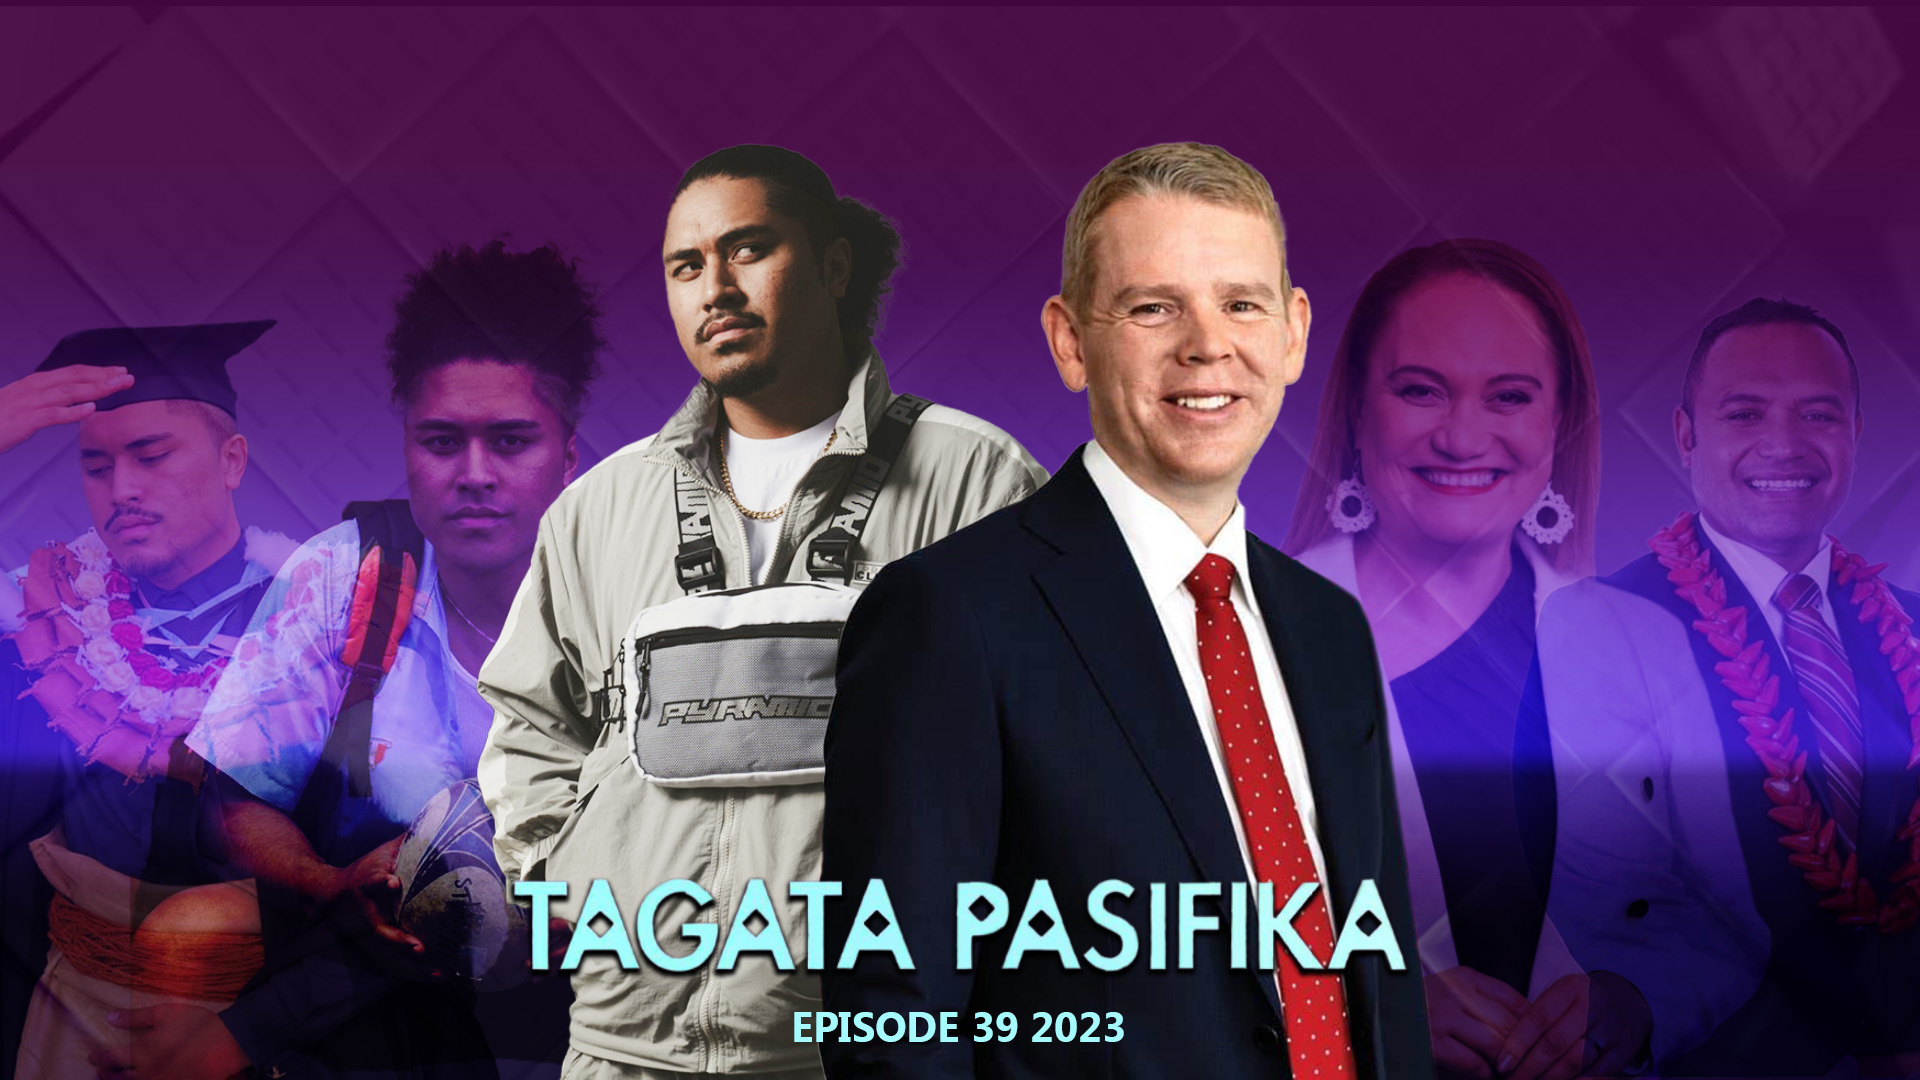 WATCH: Tagata Pasifika 2023 Episode 39